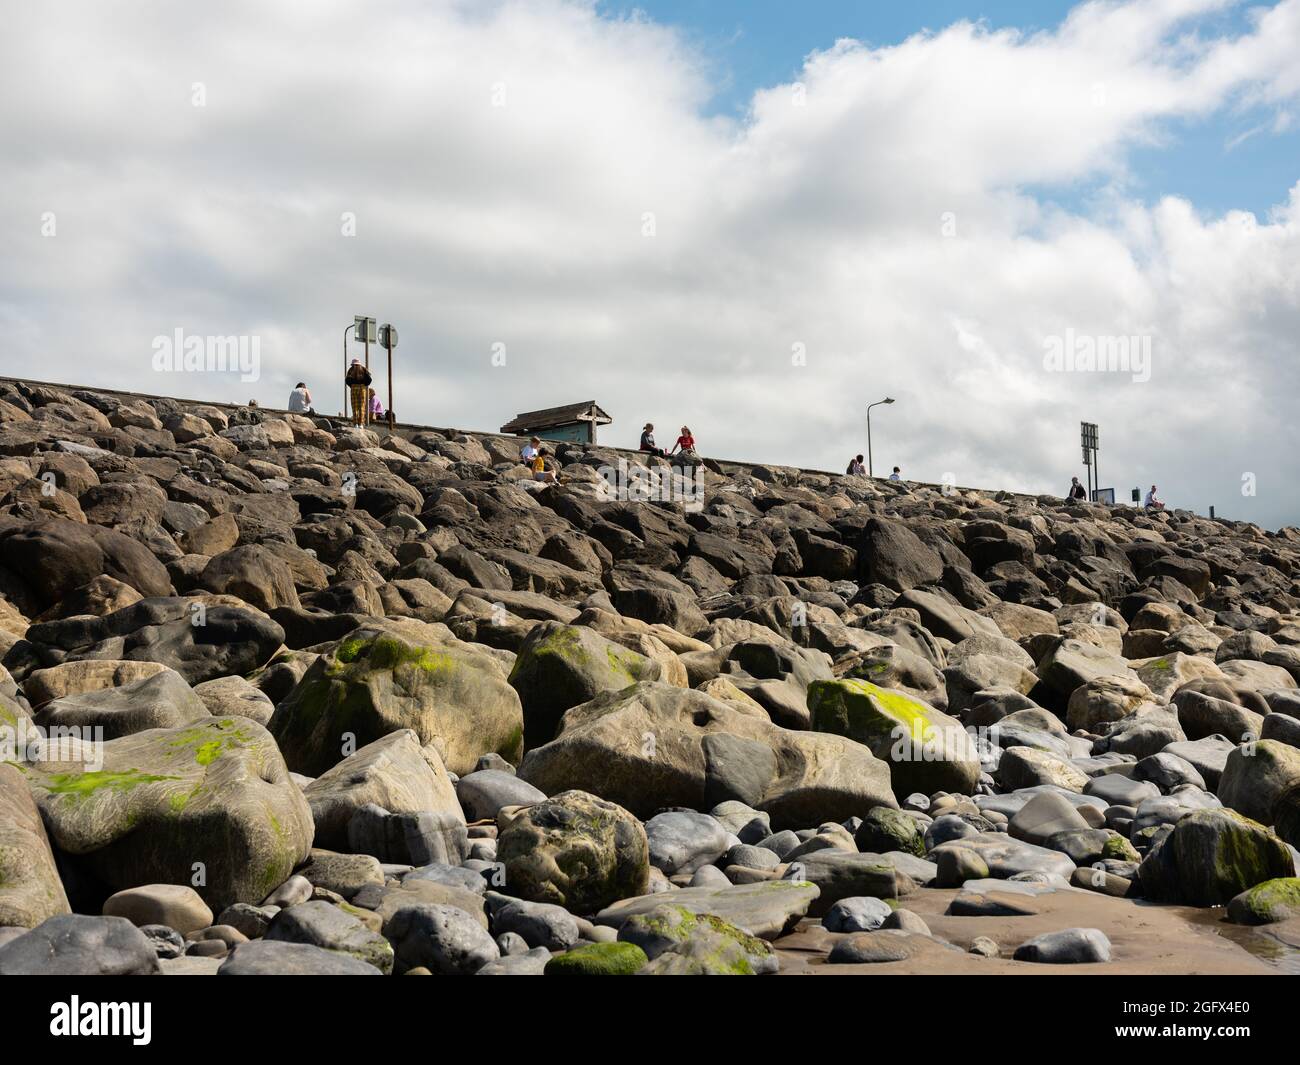 People on the promenade at Strandhill beach, Sligo, Ireland. Stock Photo